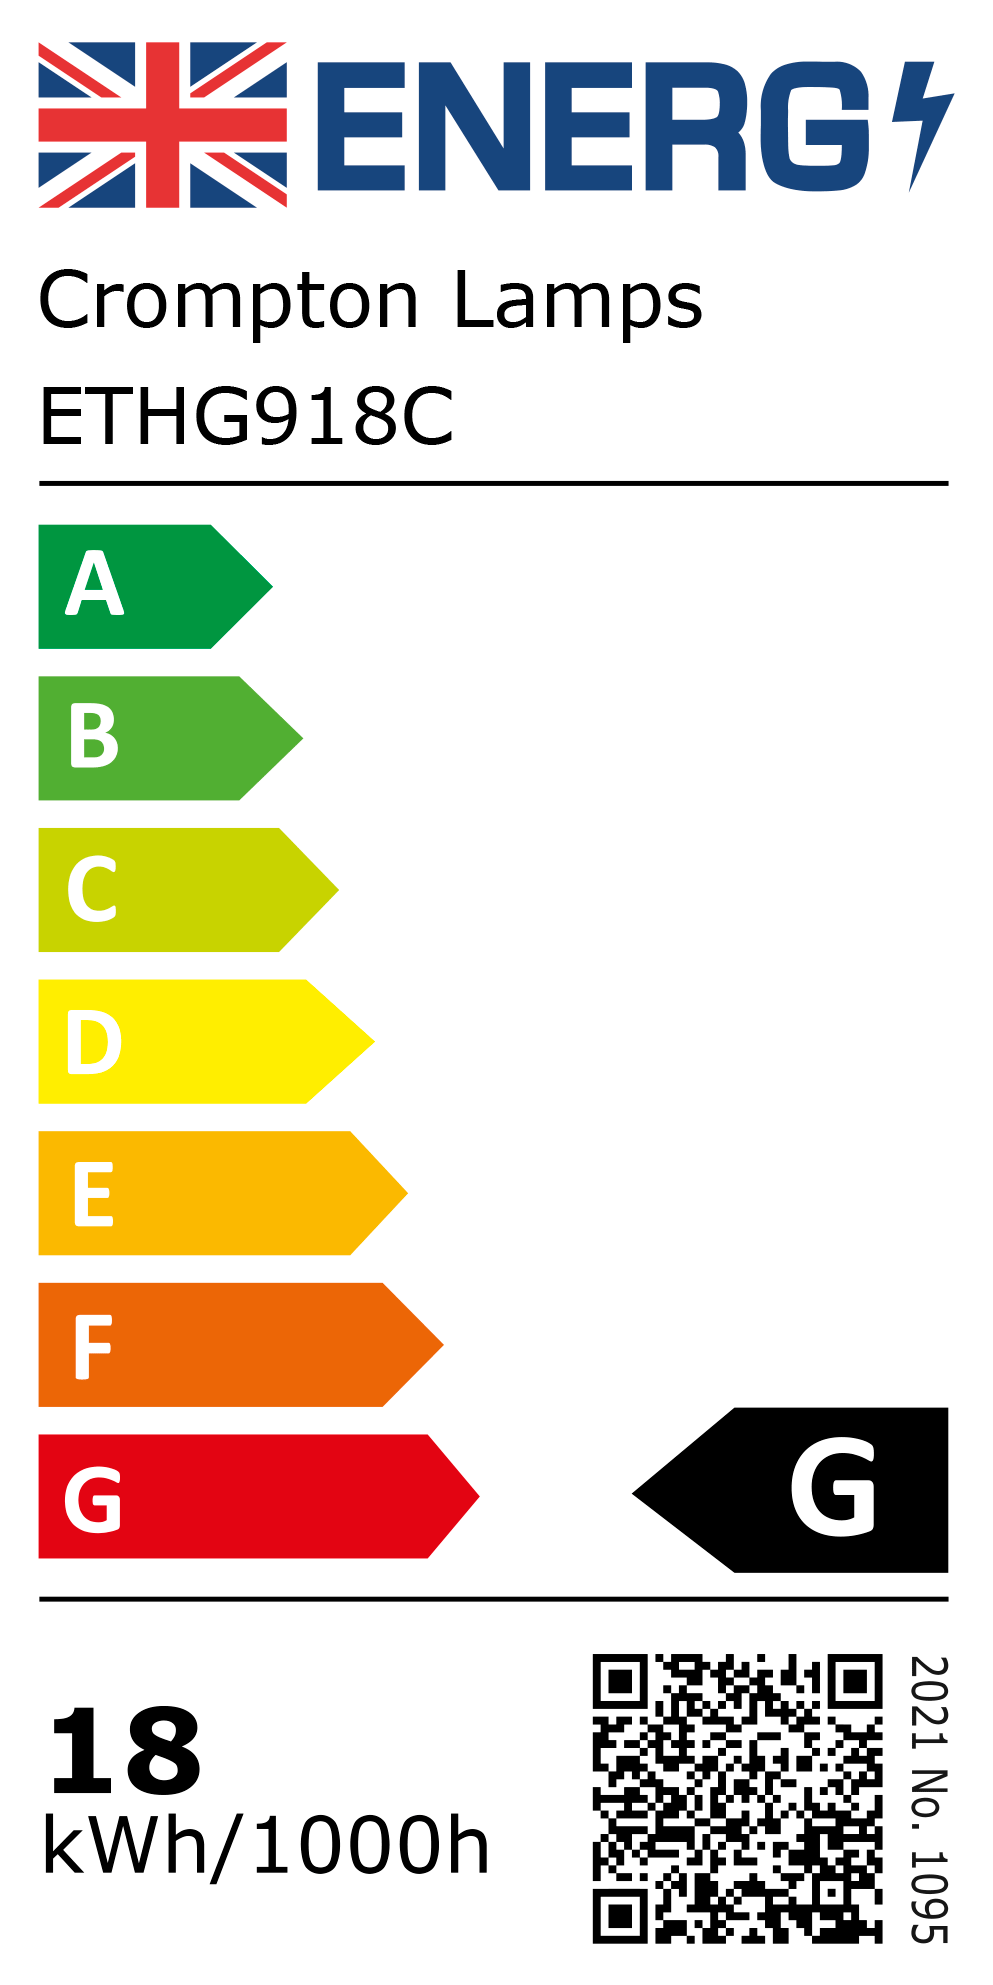 New 2021 Energy Rating Label: Stock Code ETHG918C